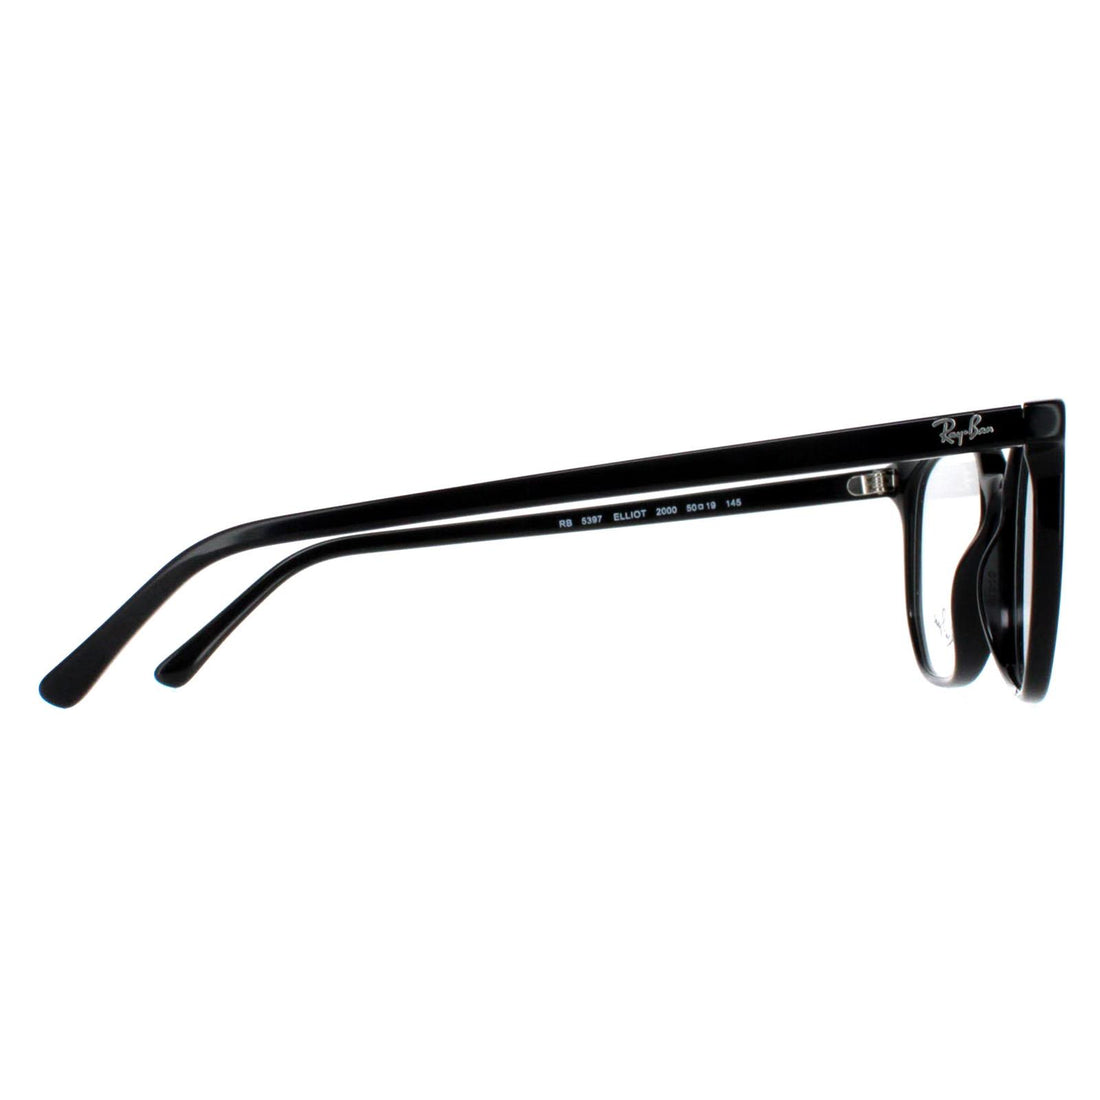 Ray-Ban RX5397 Elliot Glasses Frames